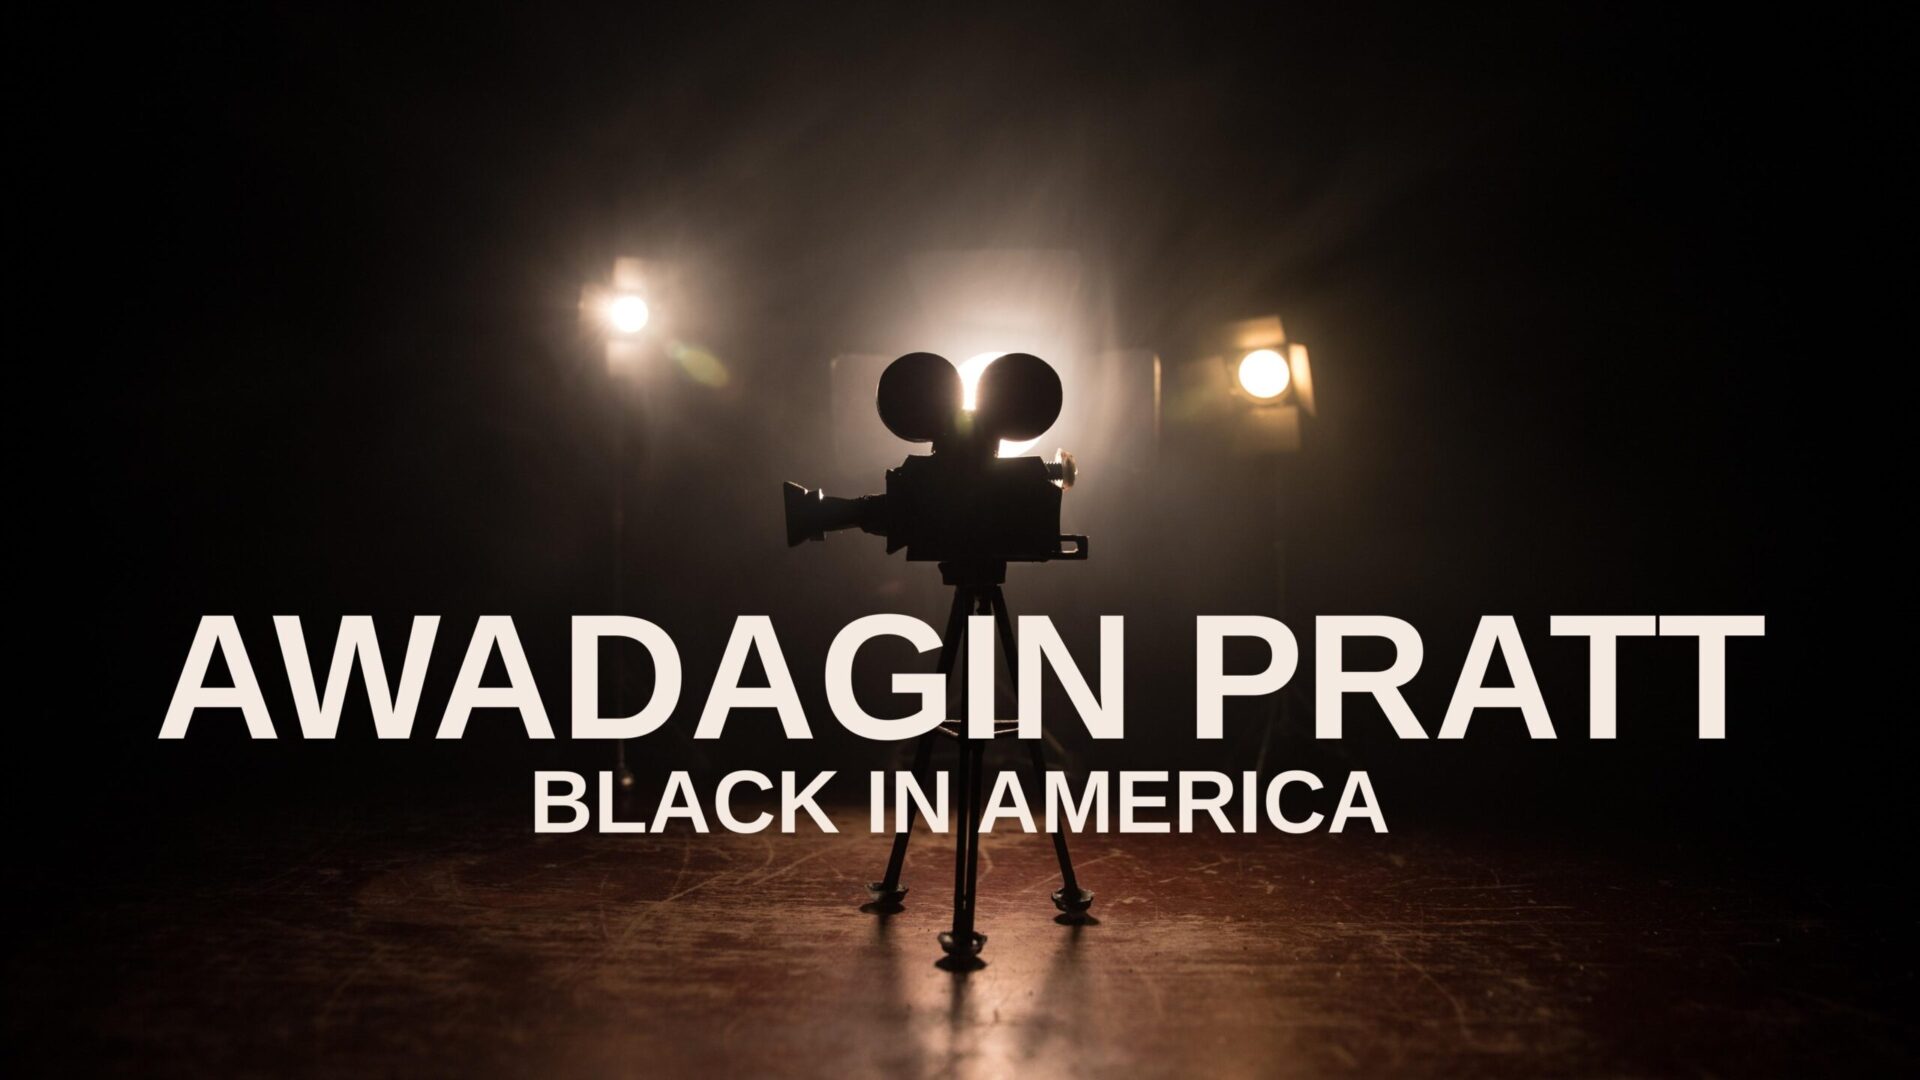 AWADAGIN PRATT: BLACK IN AMERICA